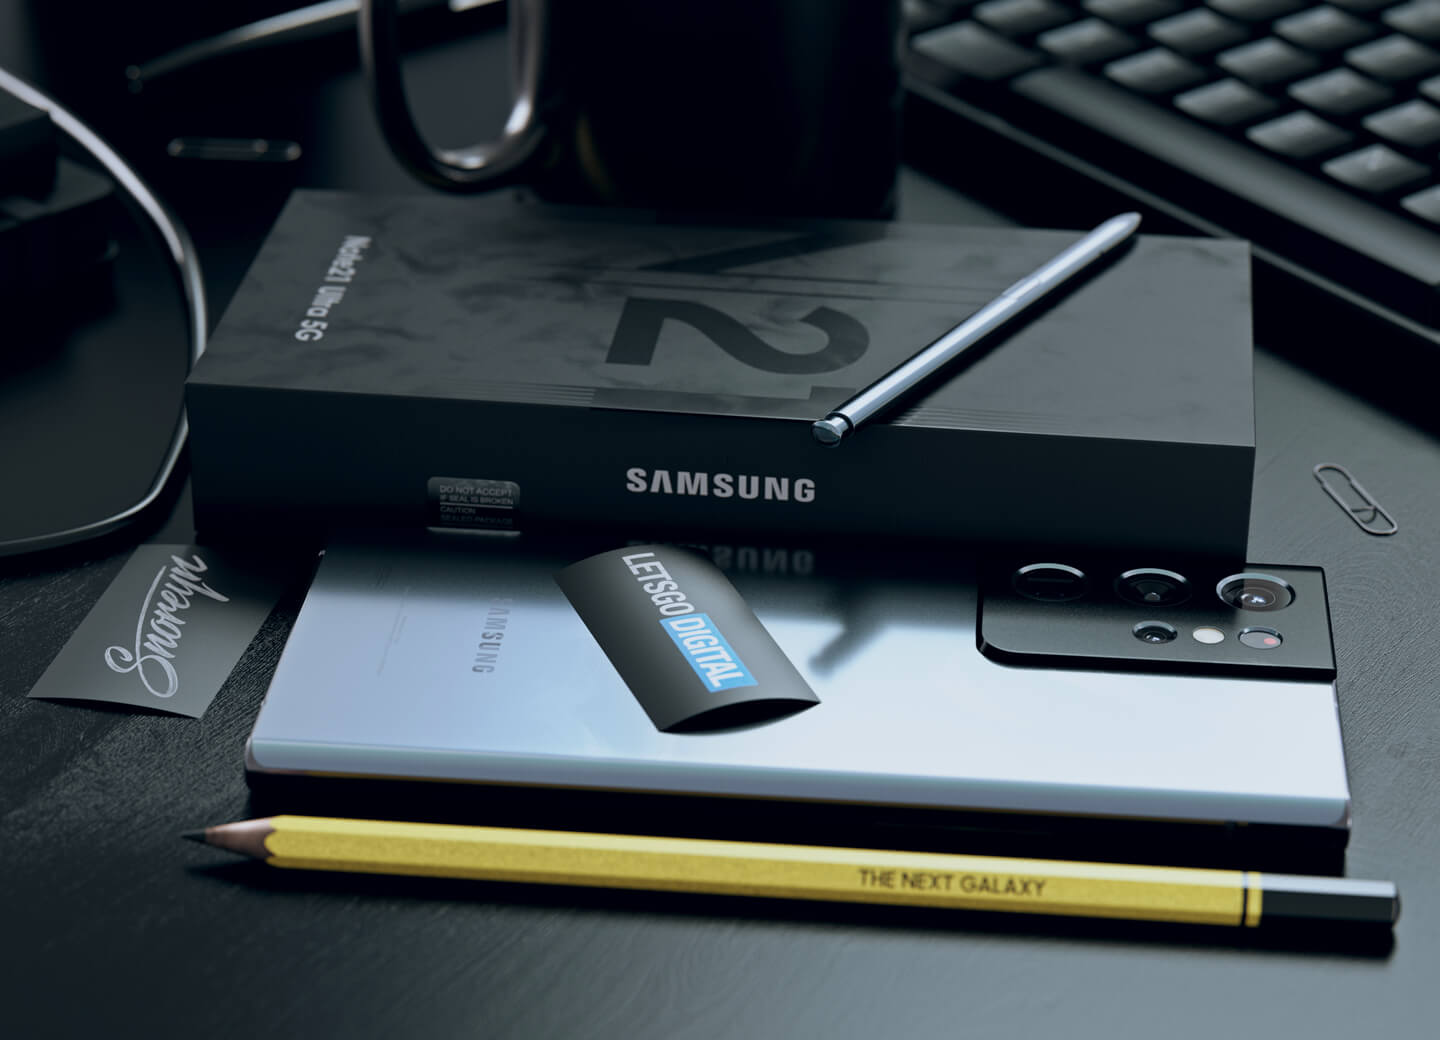 Samsung Galaxy Note smartphone